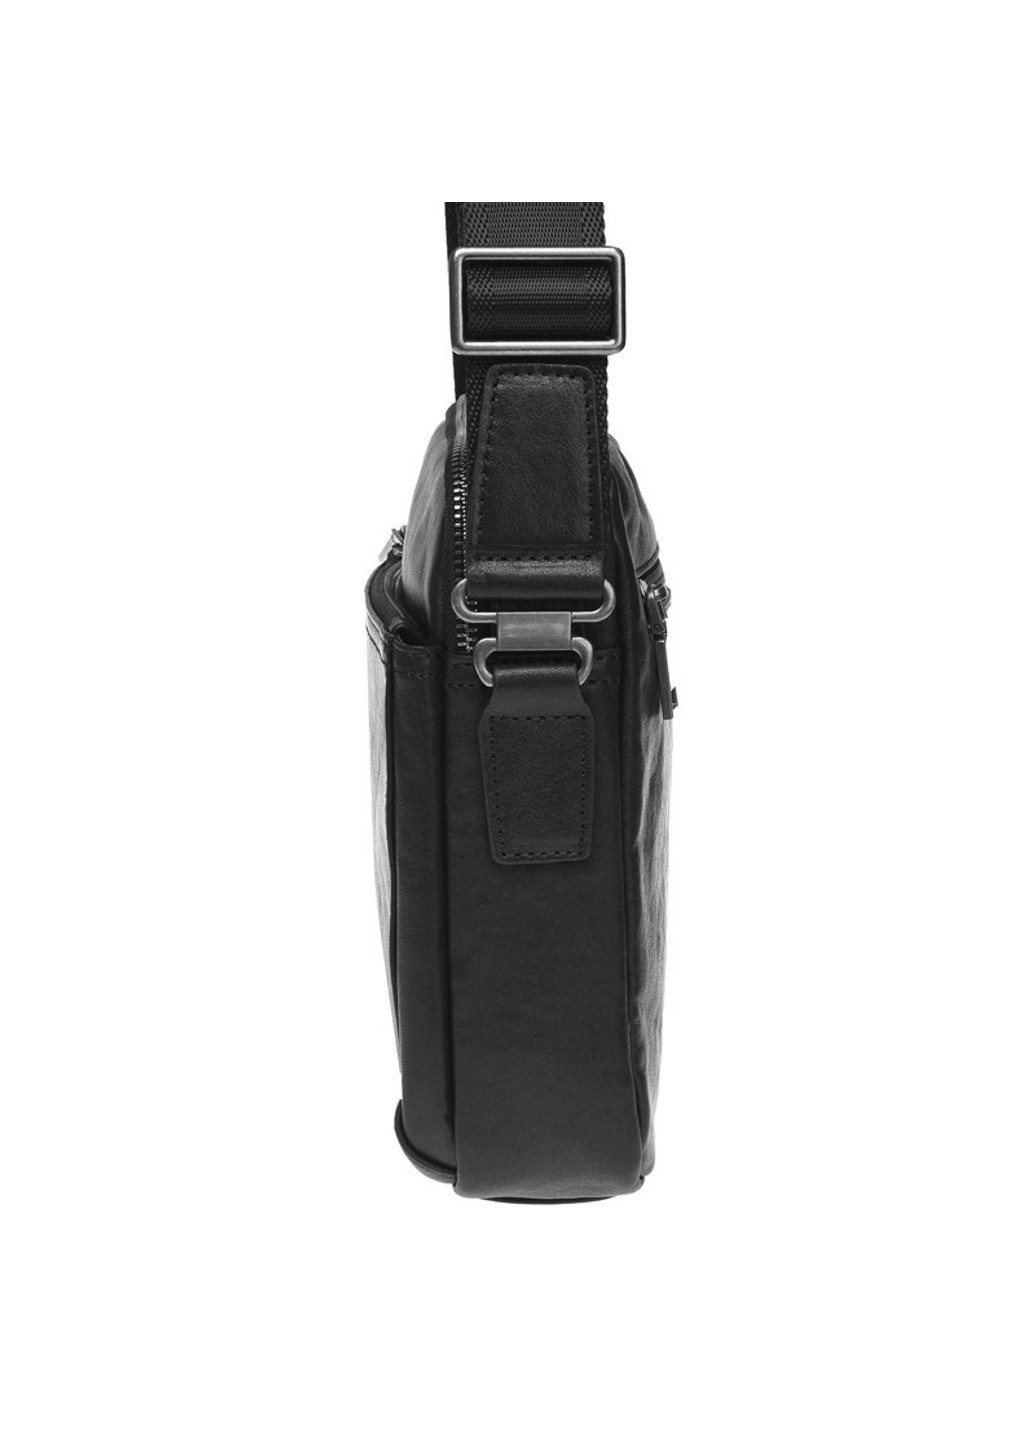 Чоловіча шкіряна сумка K16458a-black Ricco Grande (266144097)